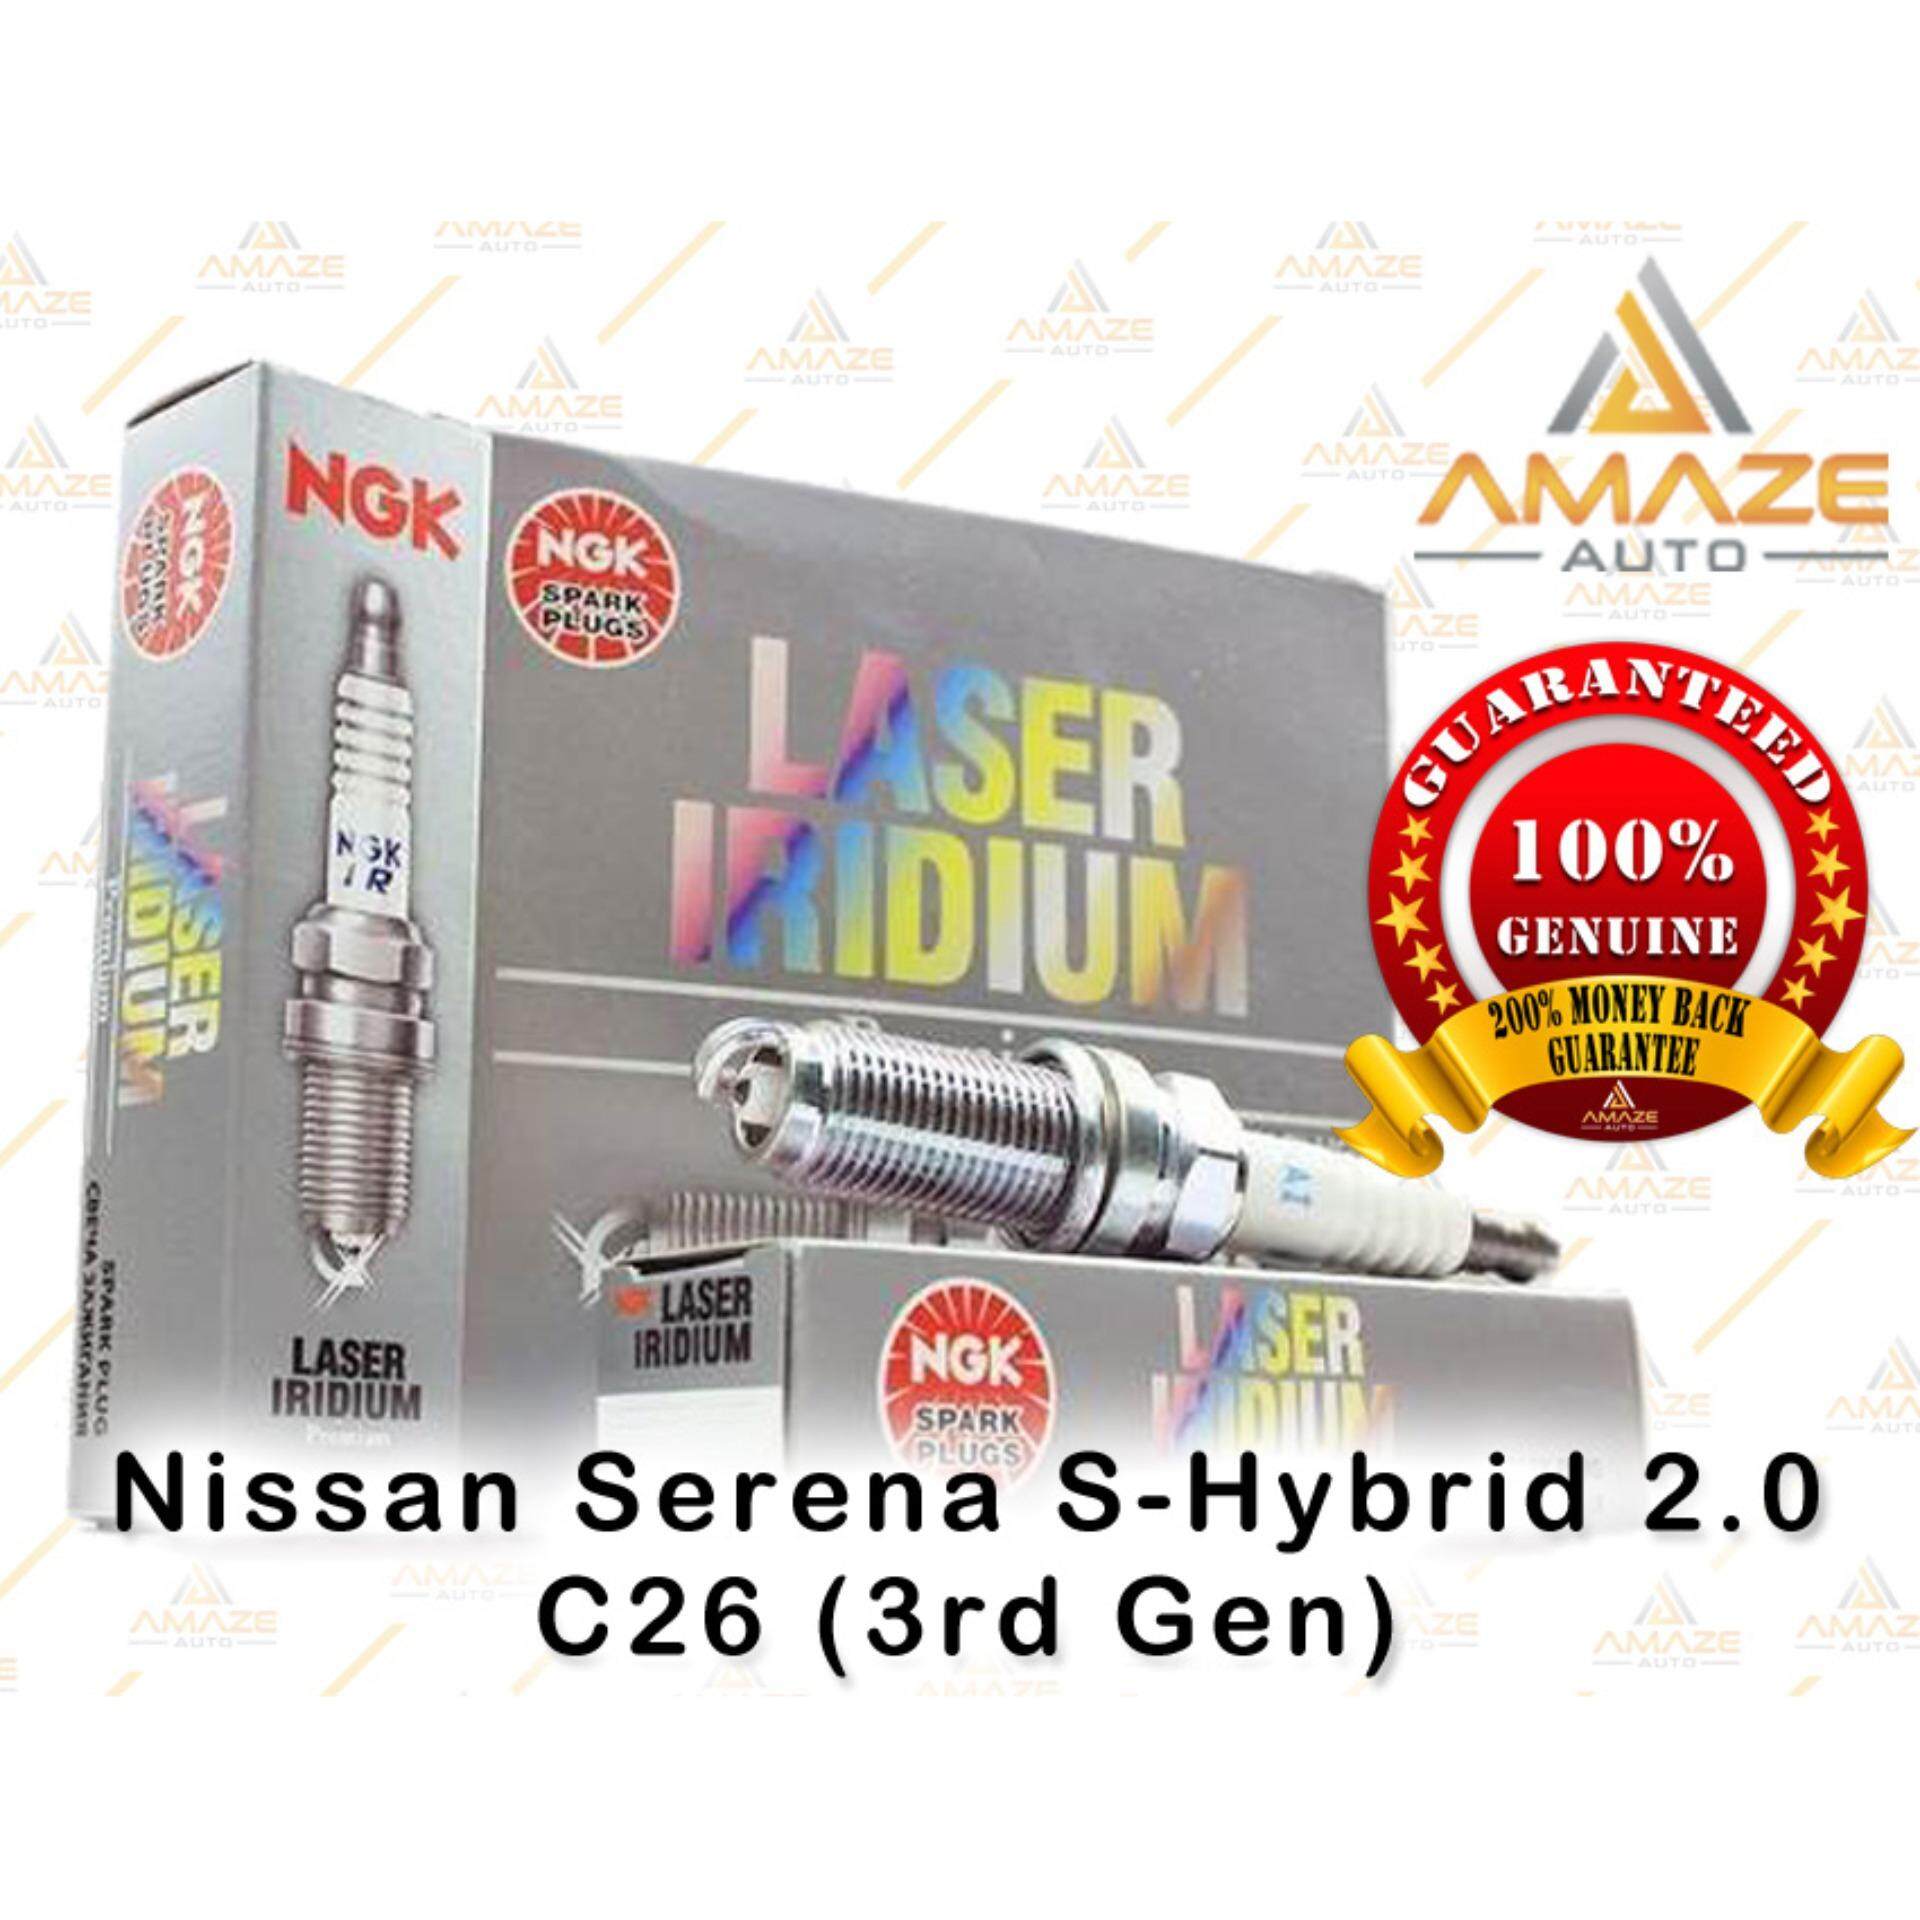 NGK Laser Iridium Spark Plug for Nissan Serena S-Hybrid 2.0 C26 (3rd Gen)